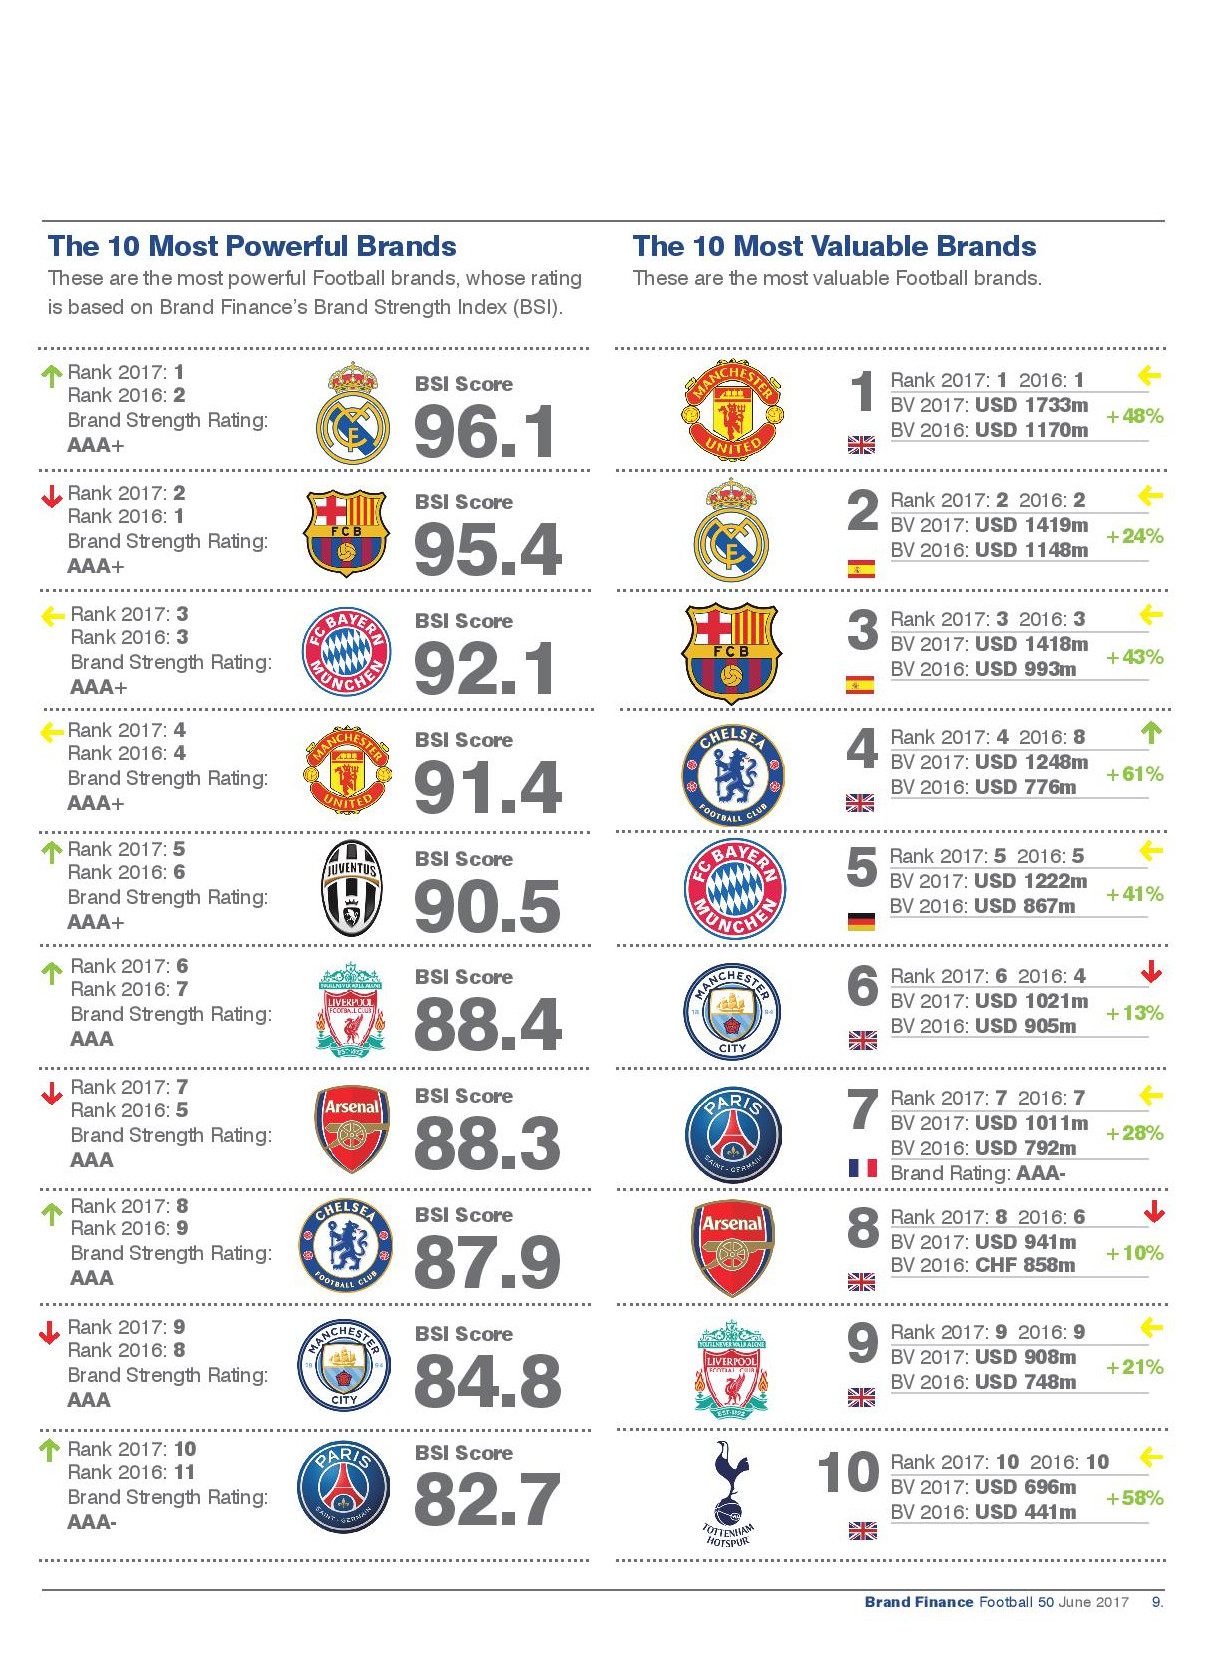 Real Madrid a devenit cel mai puternic brand in fotbal, iar Manchester United ramane cel mai valoros